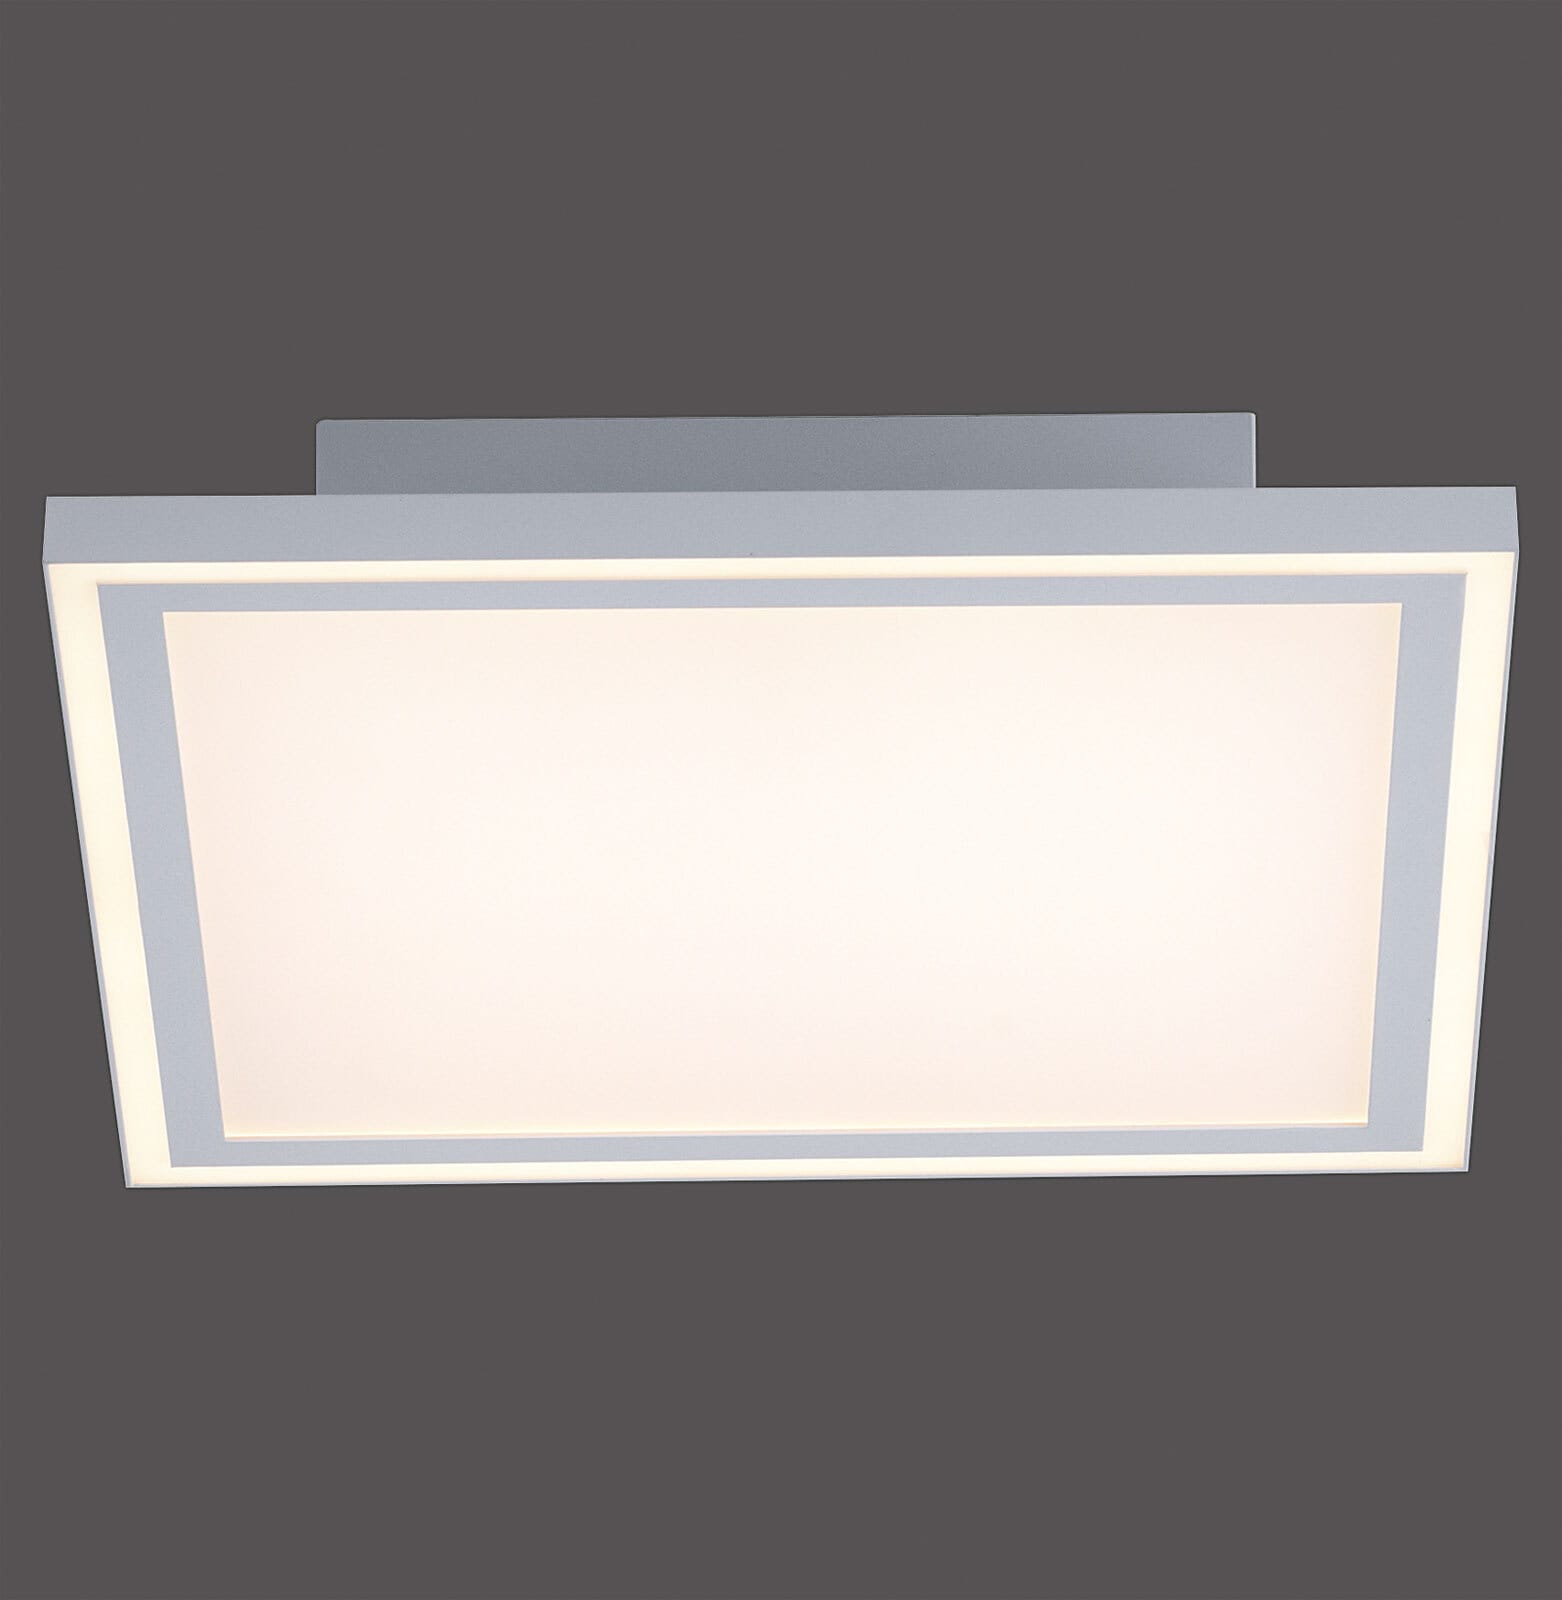 JUST LIGHT LED Deckenlampe EDGING 31 x 31 cm weiß